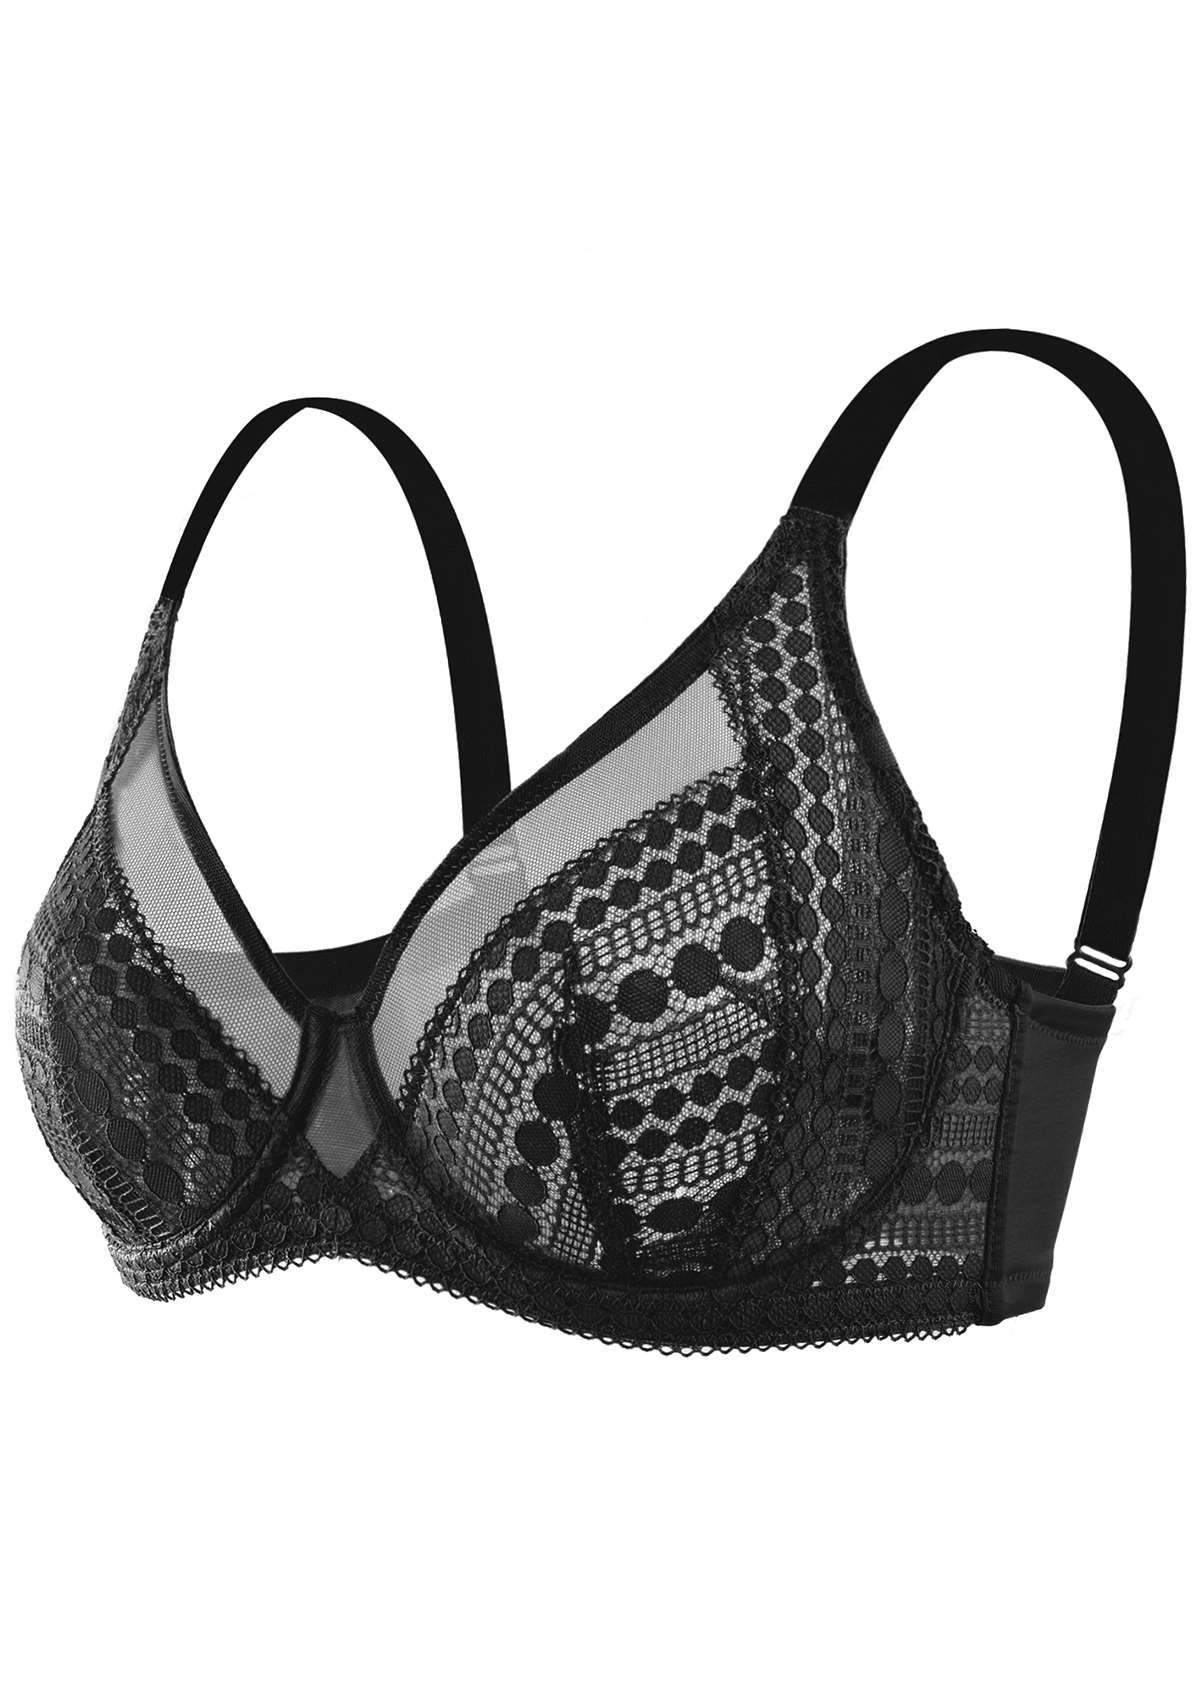 HSIA Heroine Matching Bra And Panties: Unlined Lace Unpadded Bra - Black / 44 / C